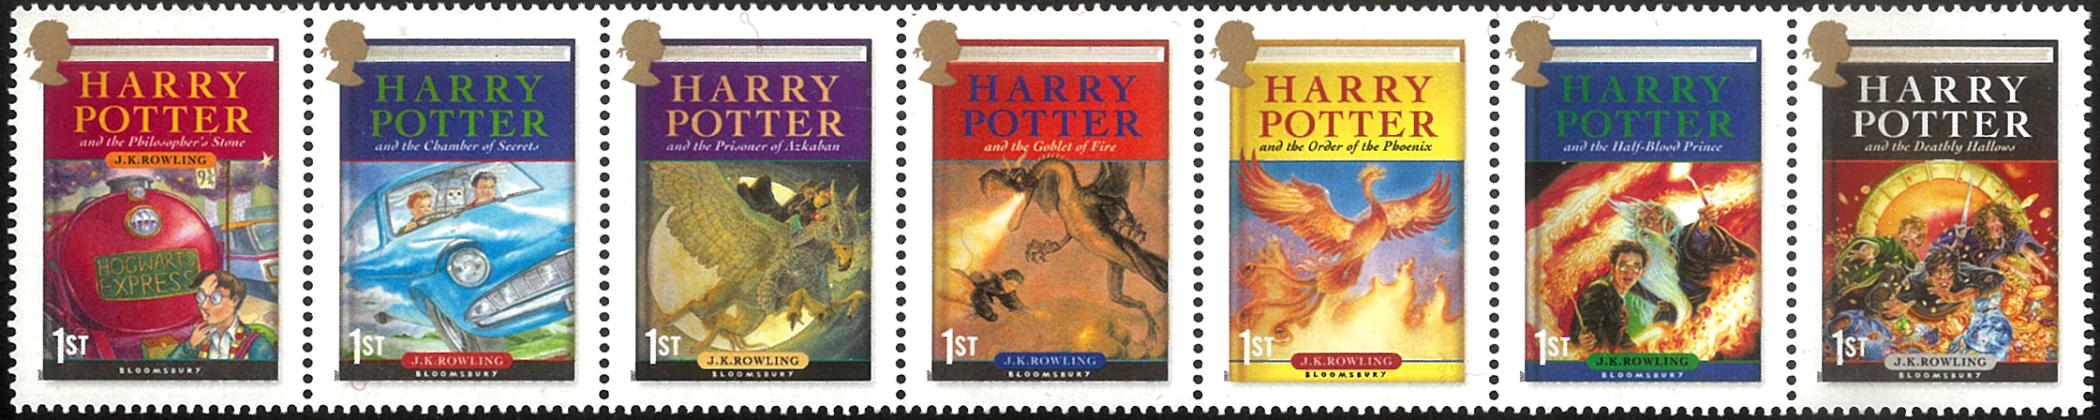 Harry Potter Wallpaper Stamps